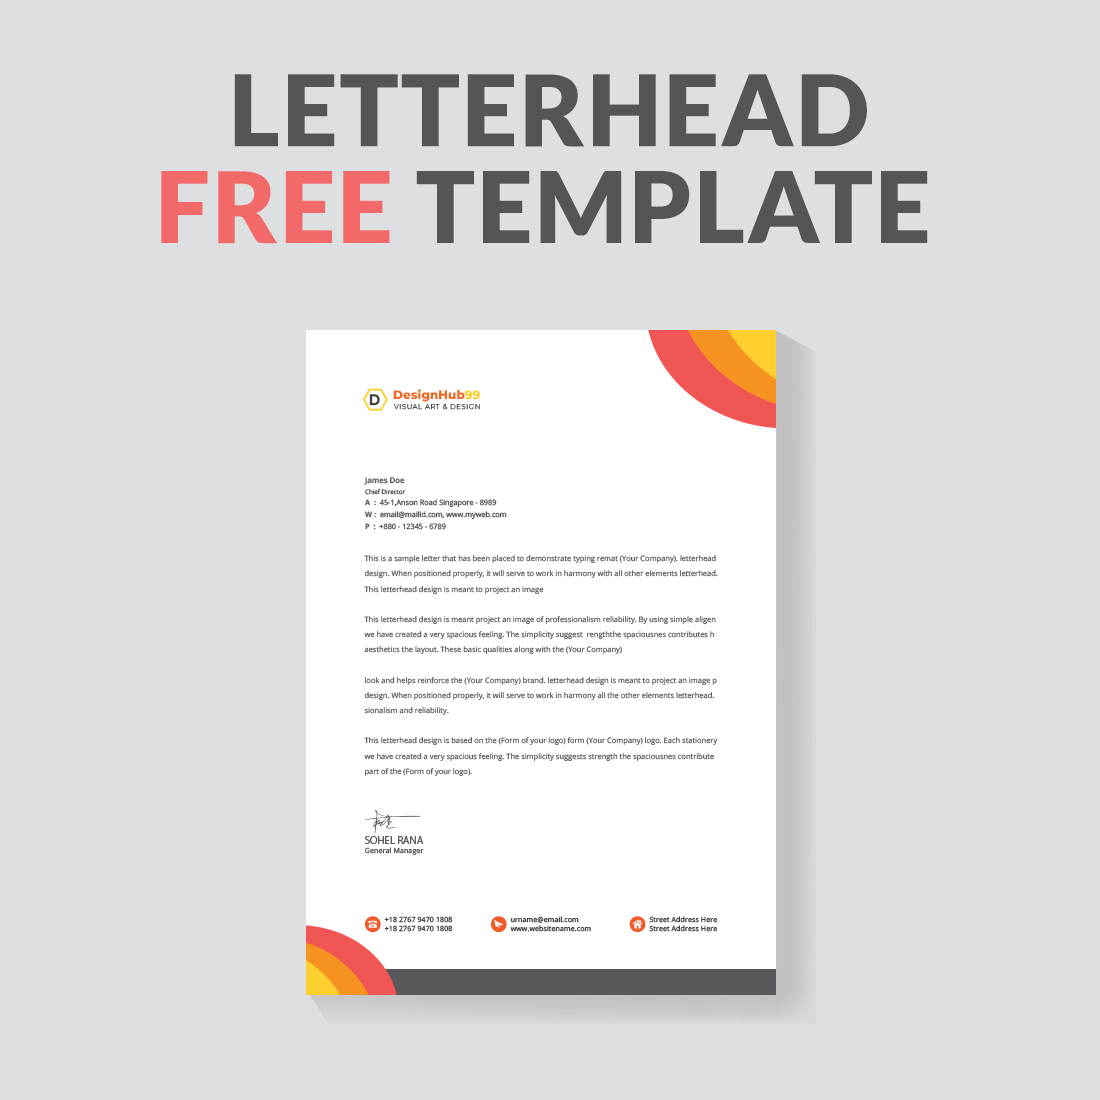 letter head, Business letterhead design Free cover image.